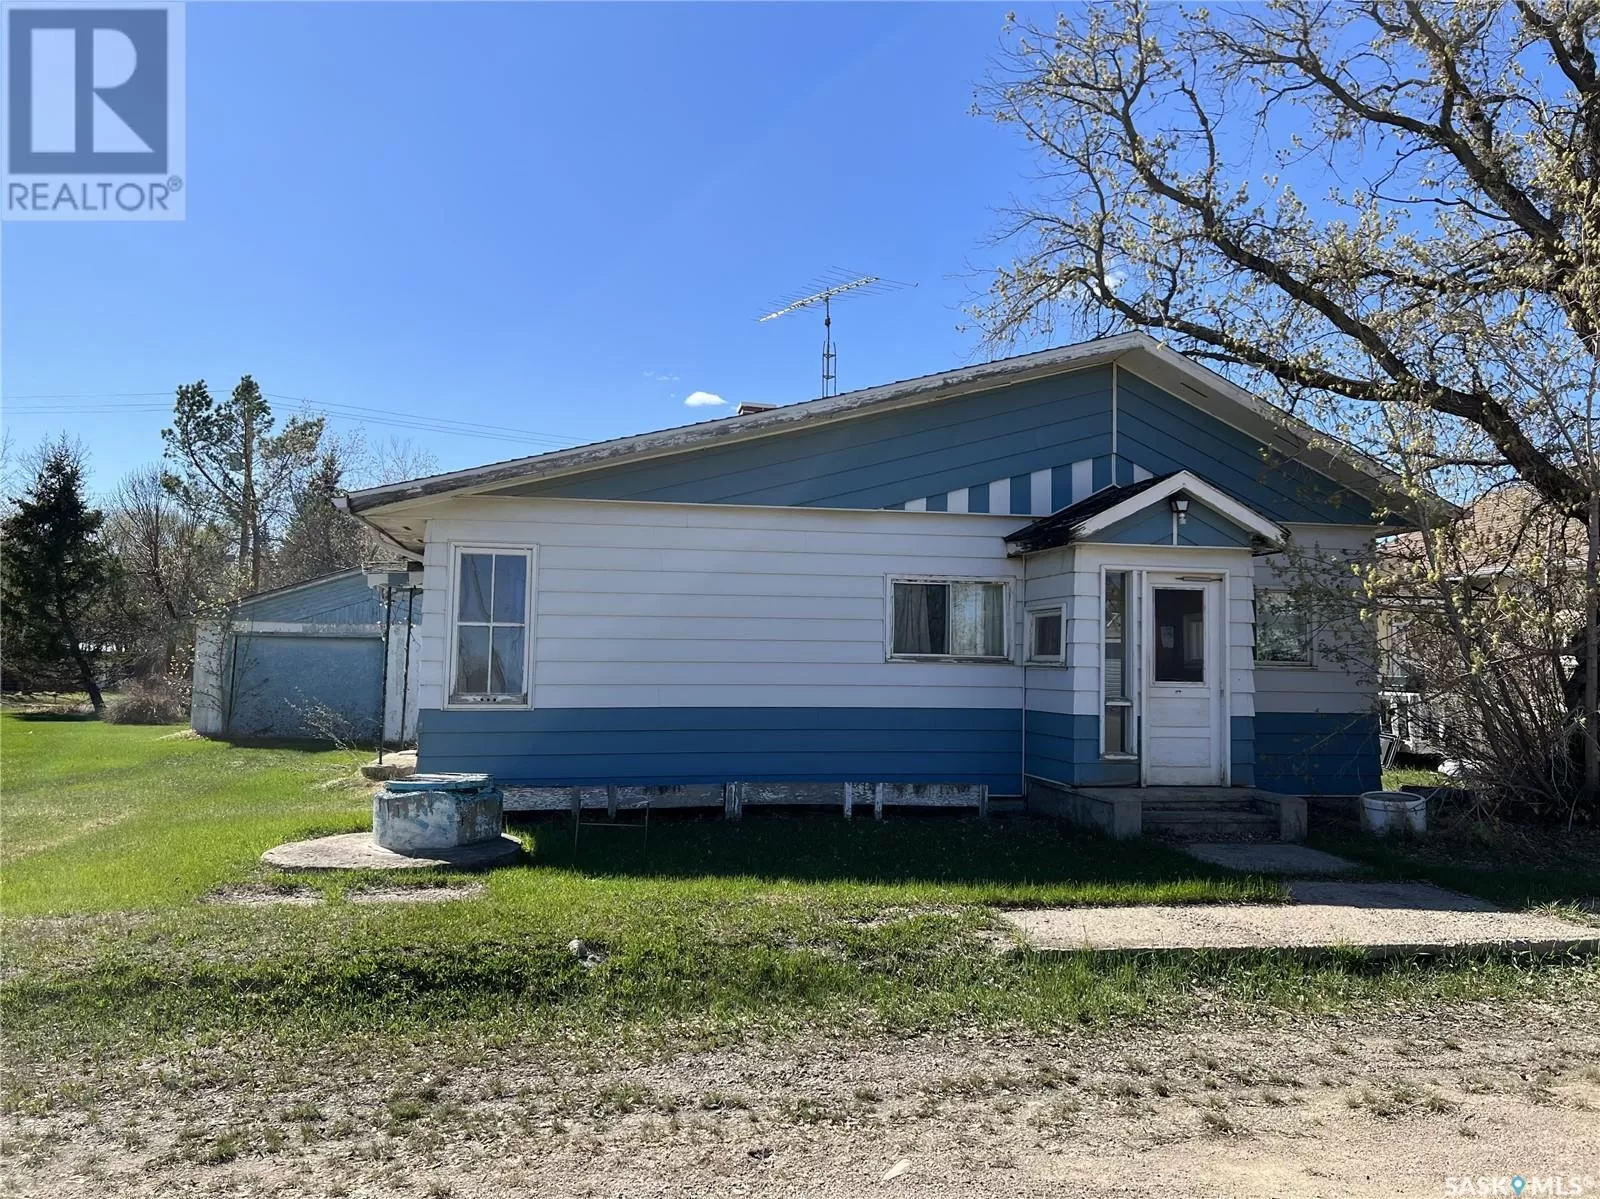 House for rent: 108 Church Avenue, Makwa, Saskatchewan S0M 1N0